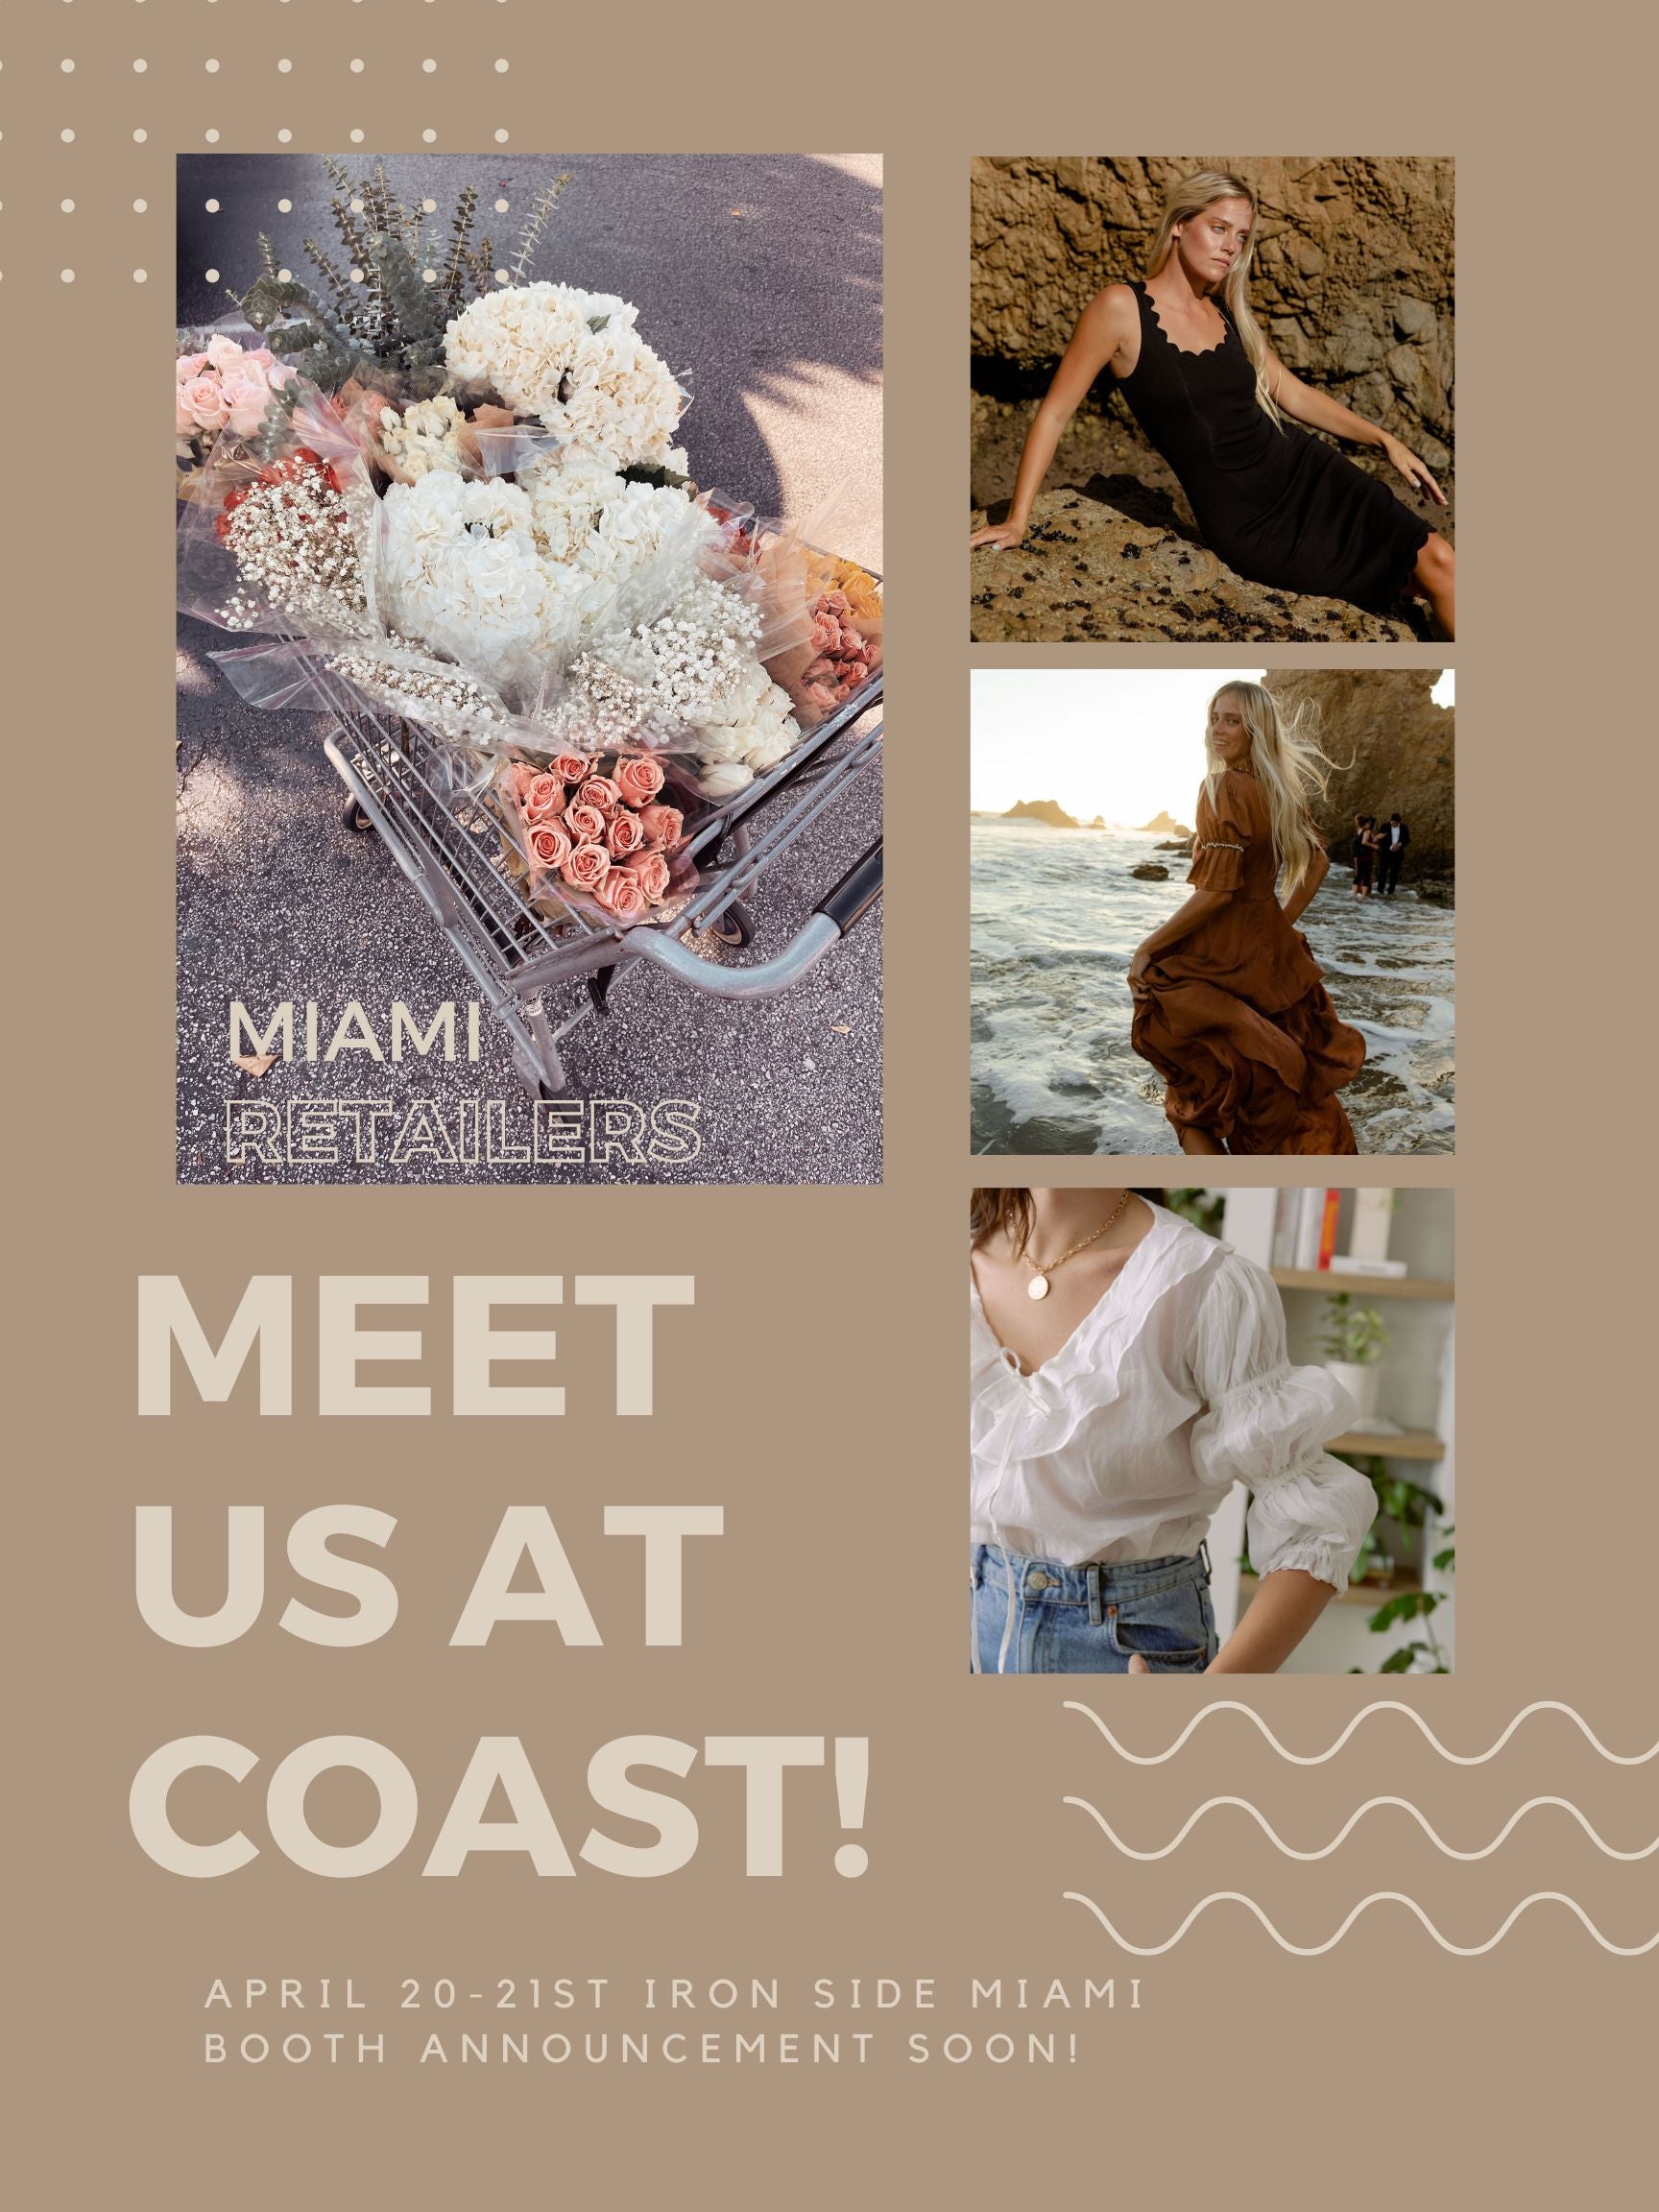 Retailers In Miami Meet Us At Coast